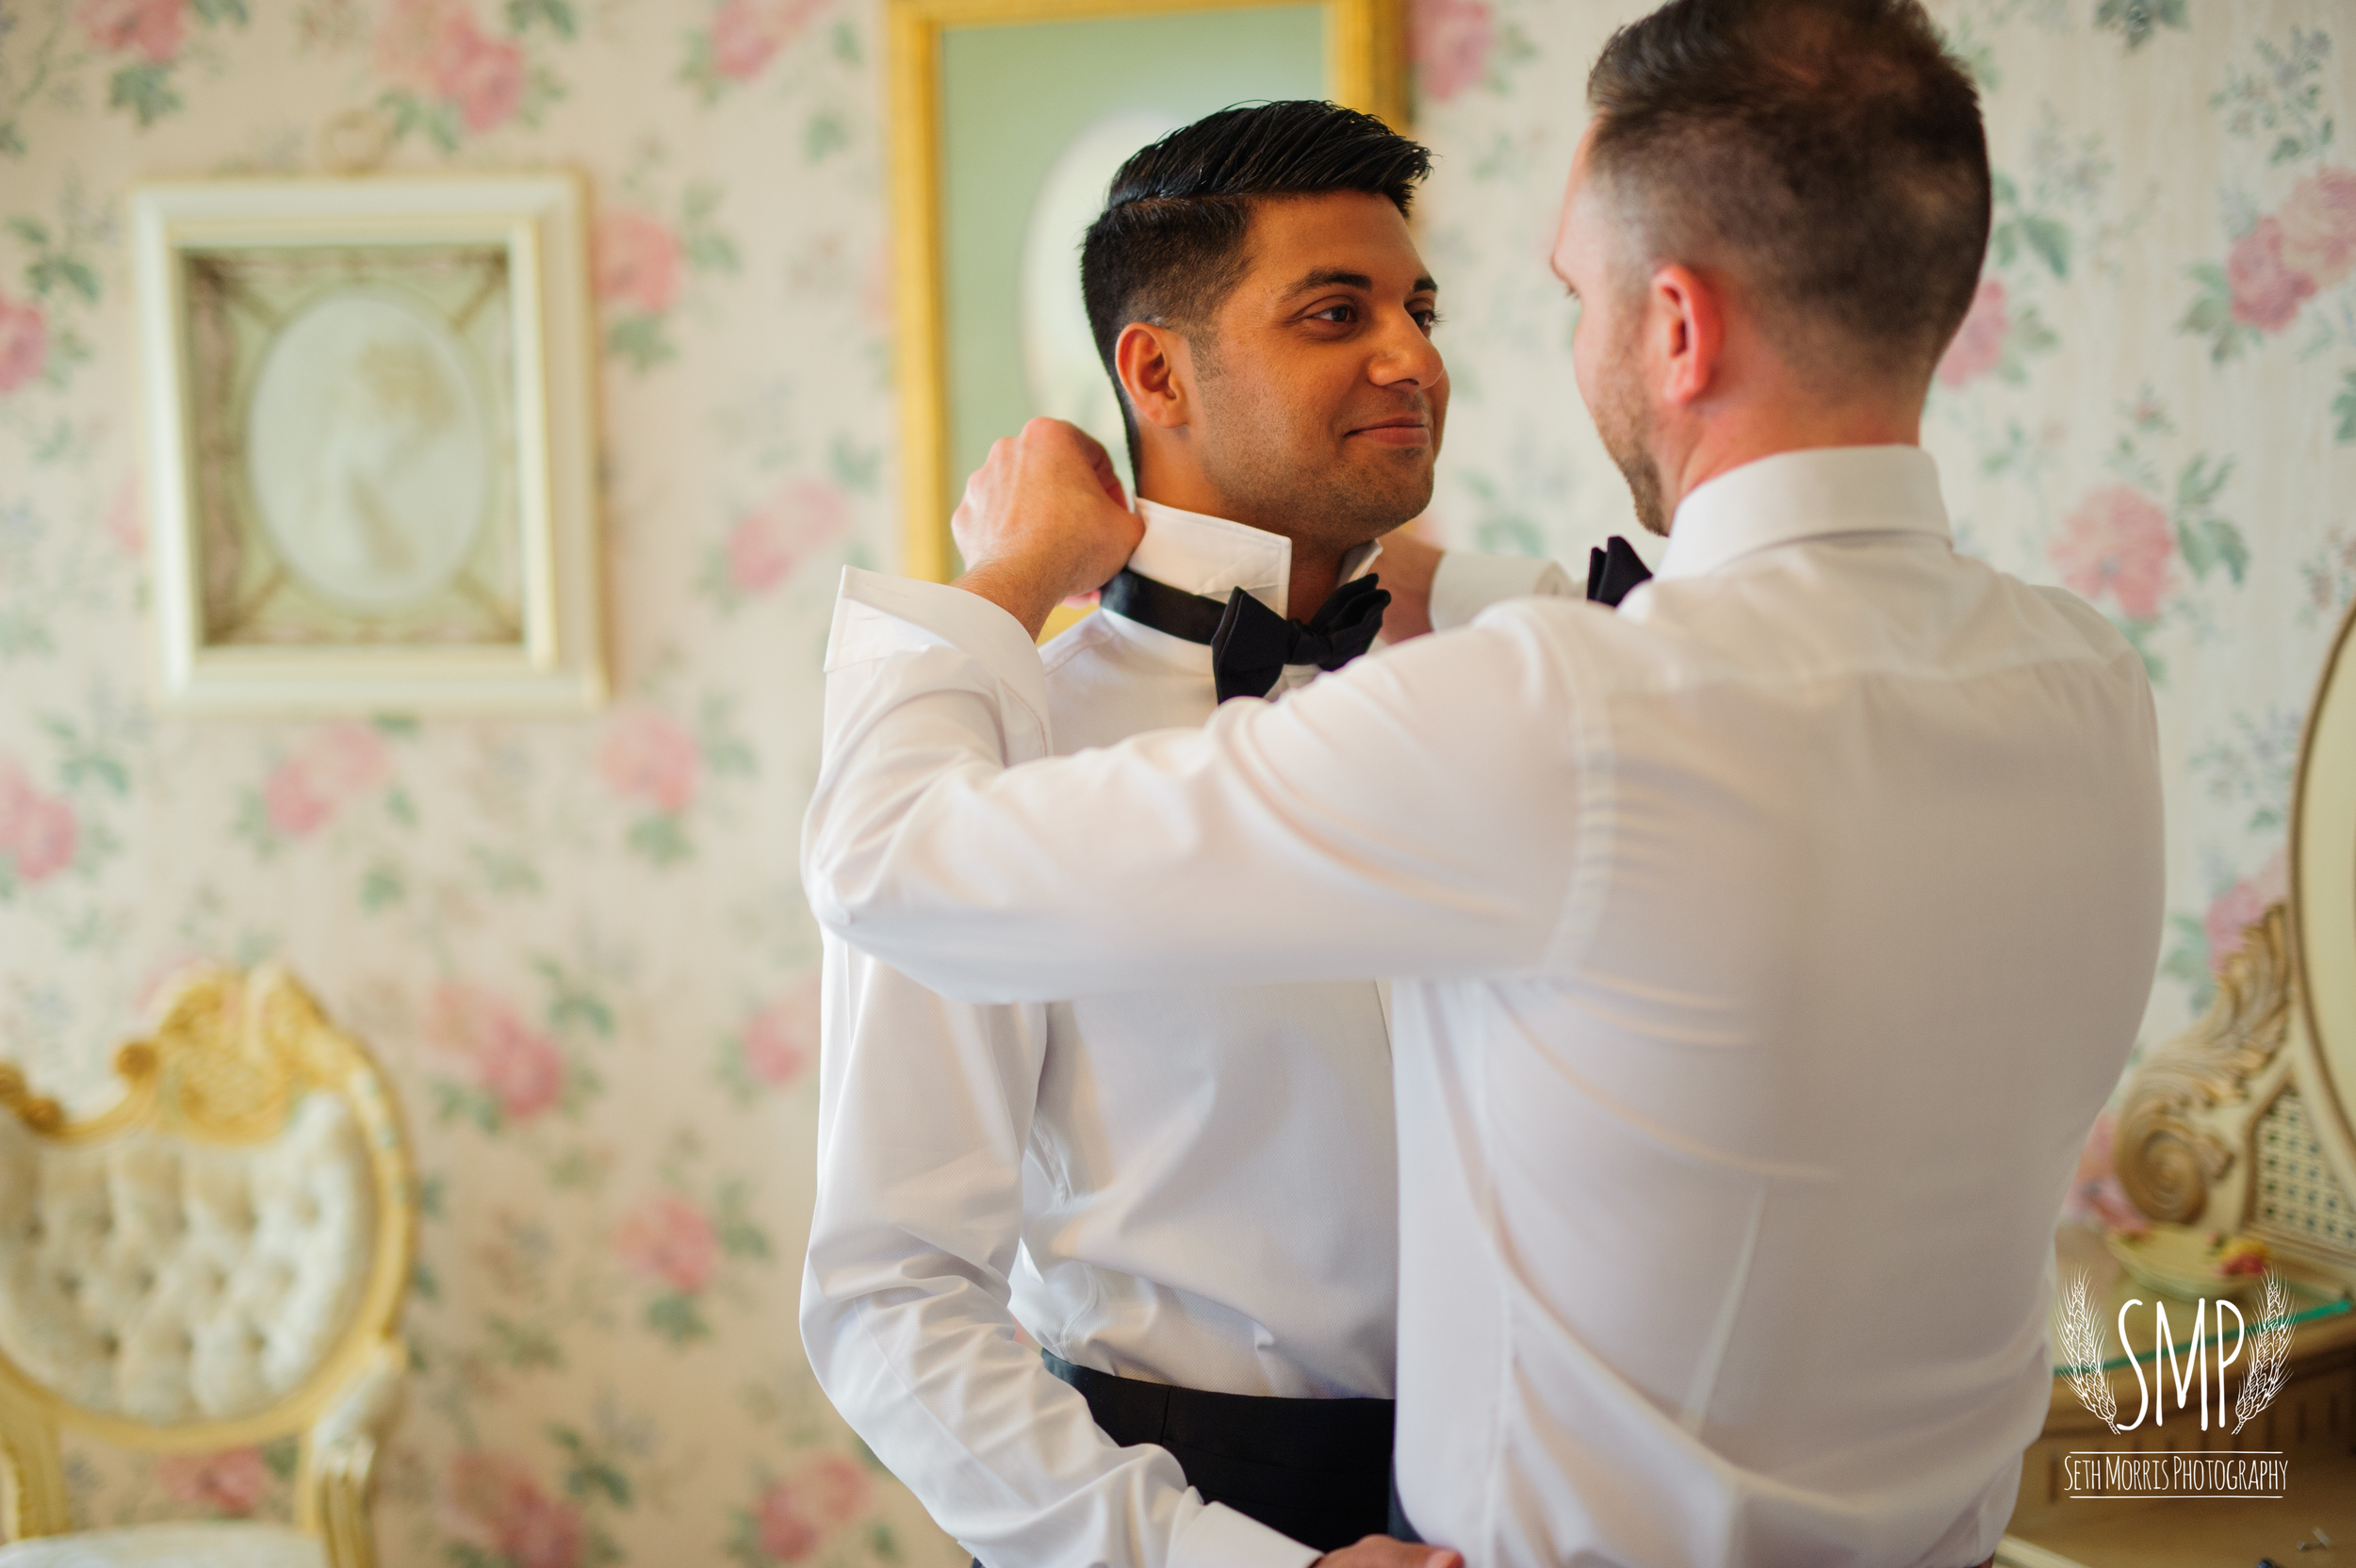 same-sex-wedding-photographer-chicago-illinois-2.jpg